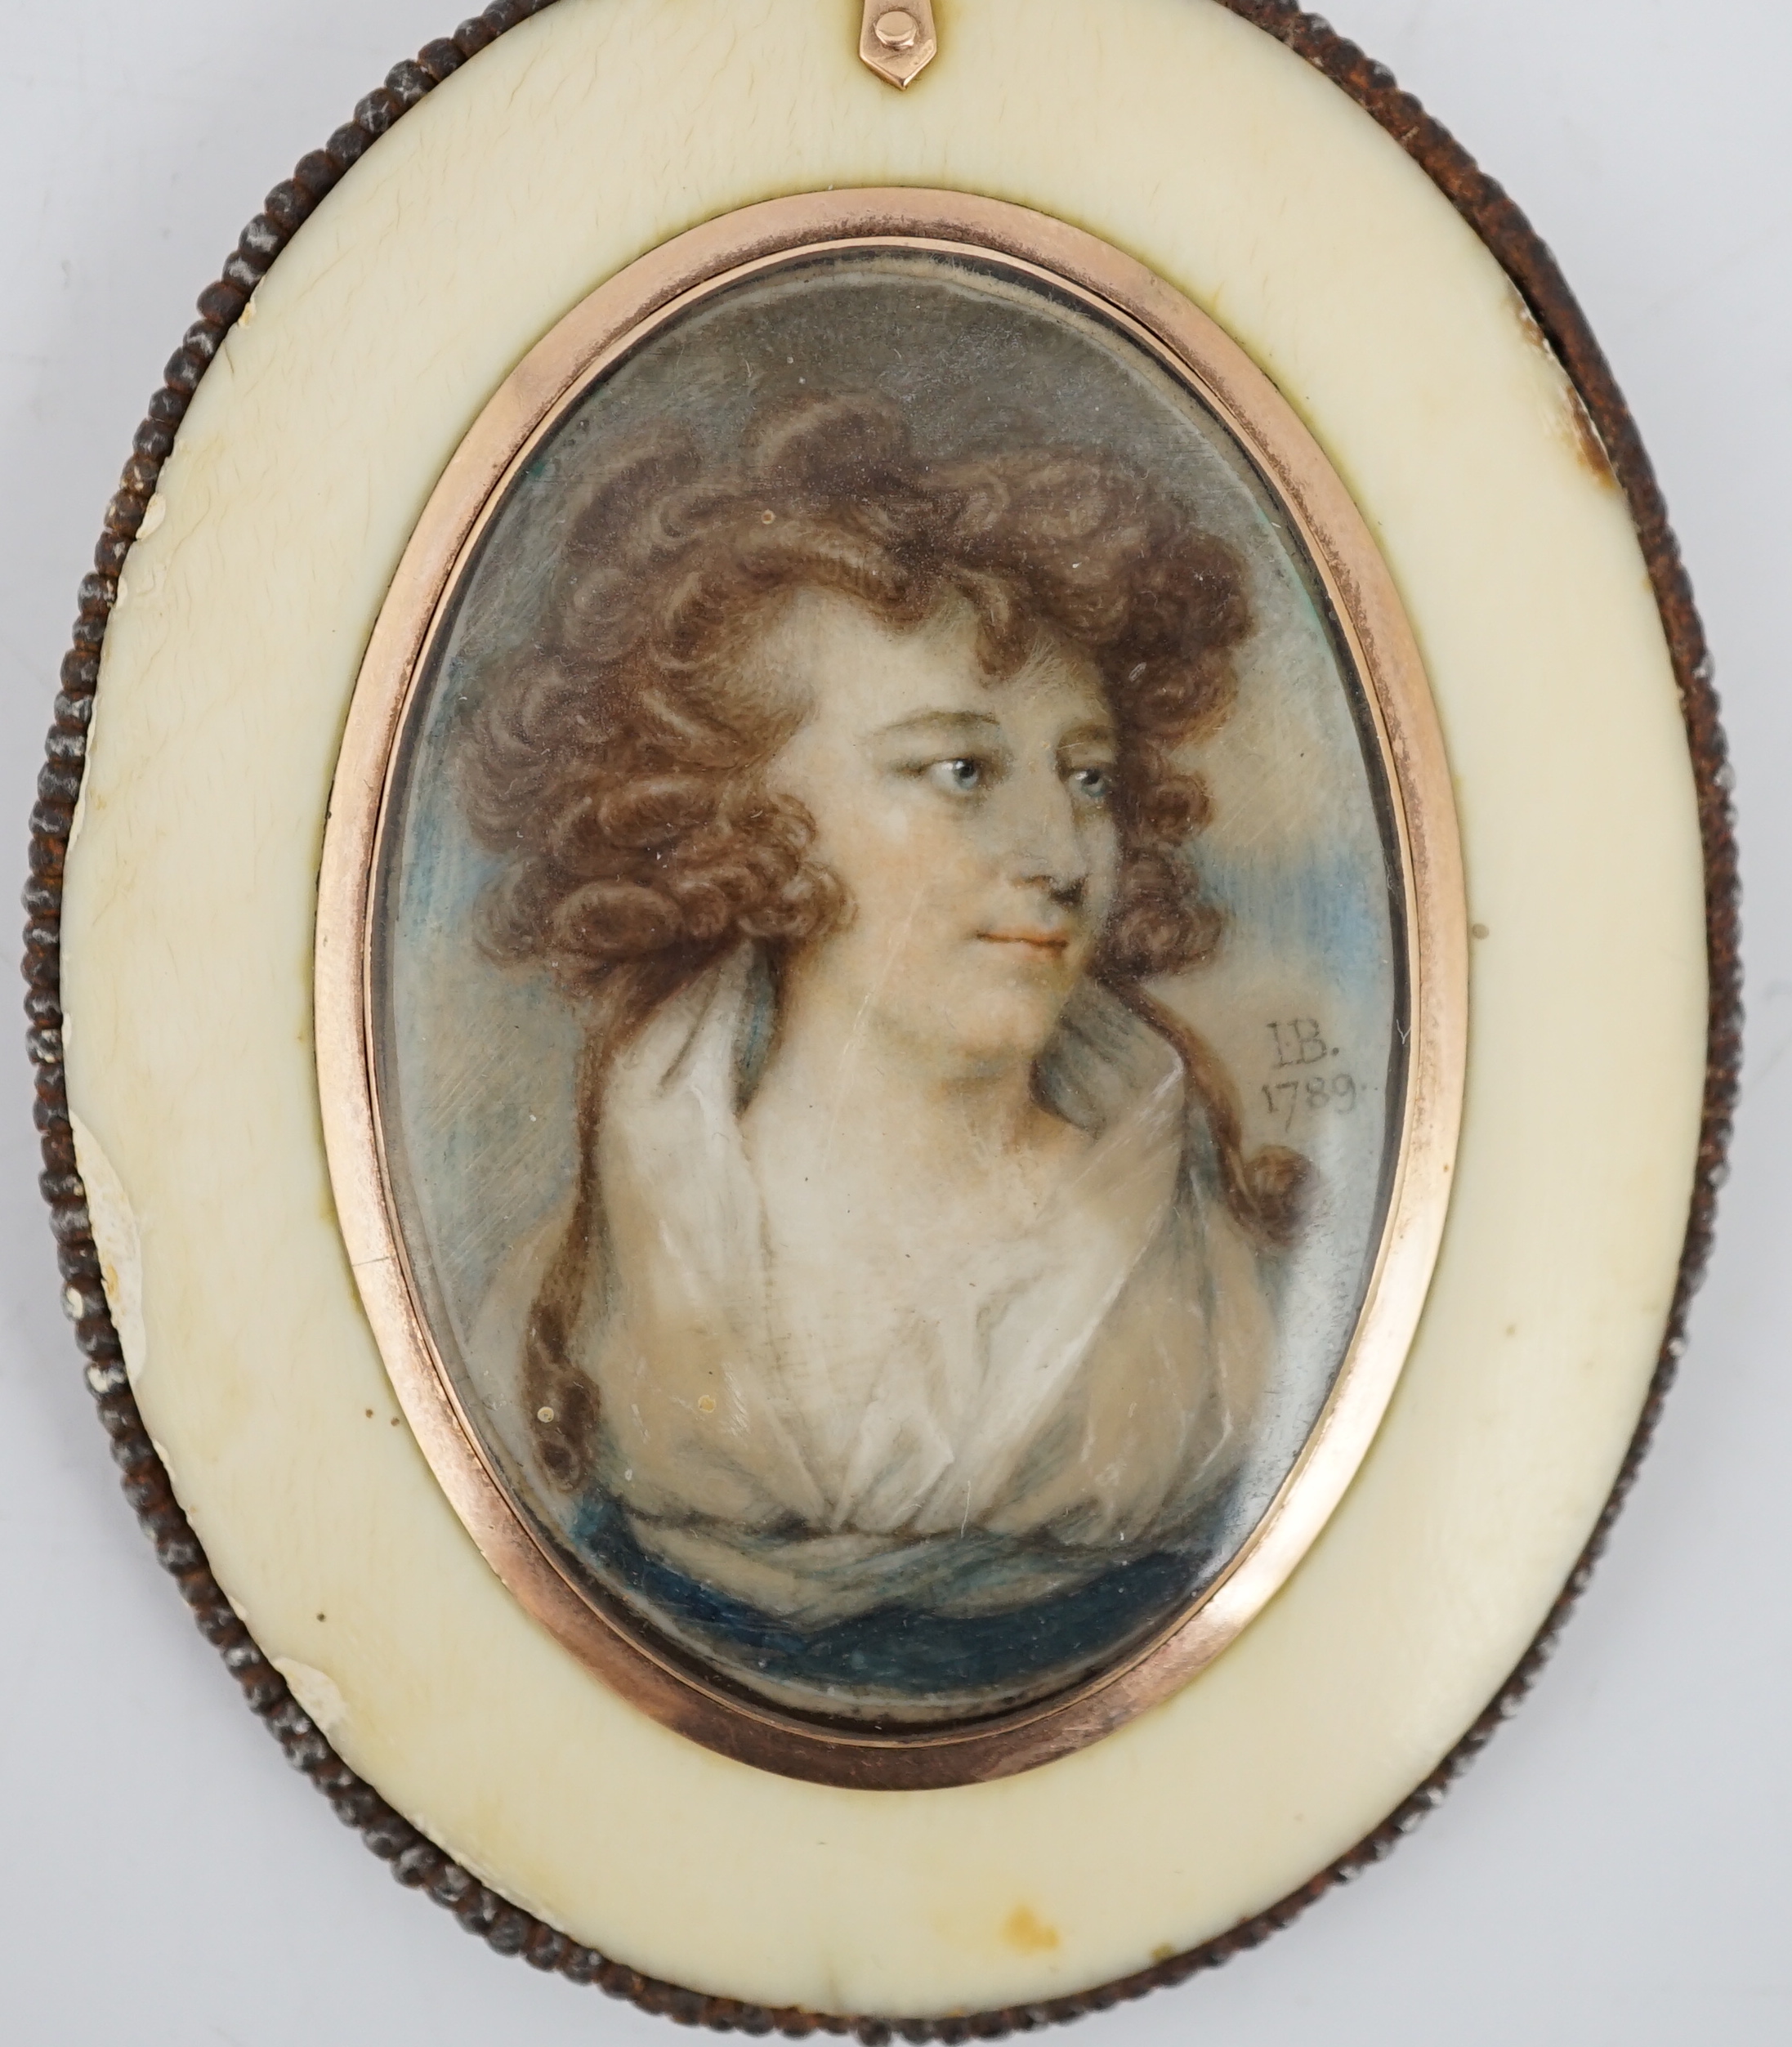 John Bogle (British, 1746-1803), Portrait miniature of a lady, oil on ivory, 4.3 x 3cm. CITES Submission reference S8HJ56MK